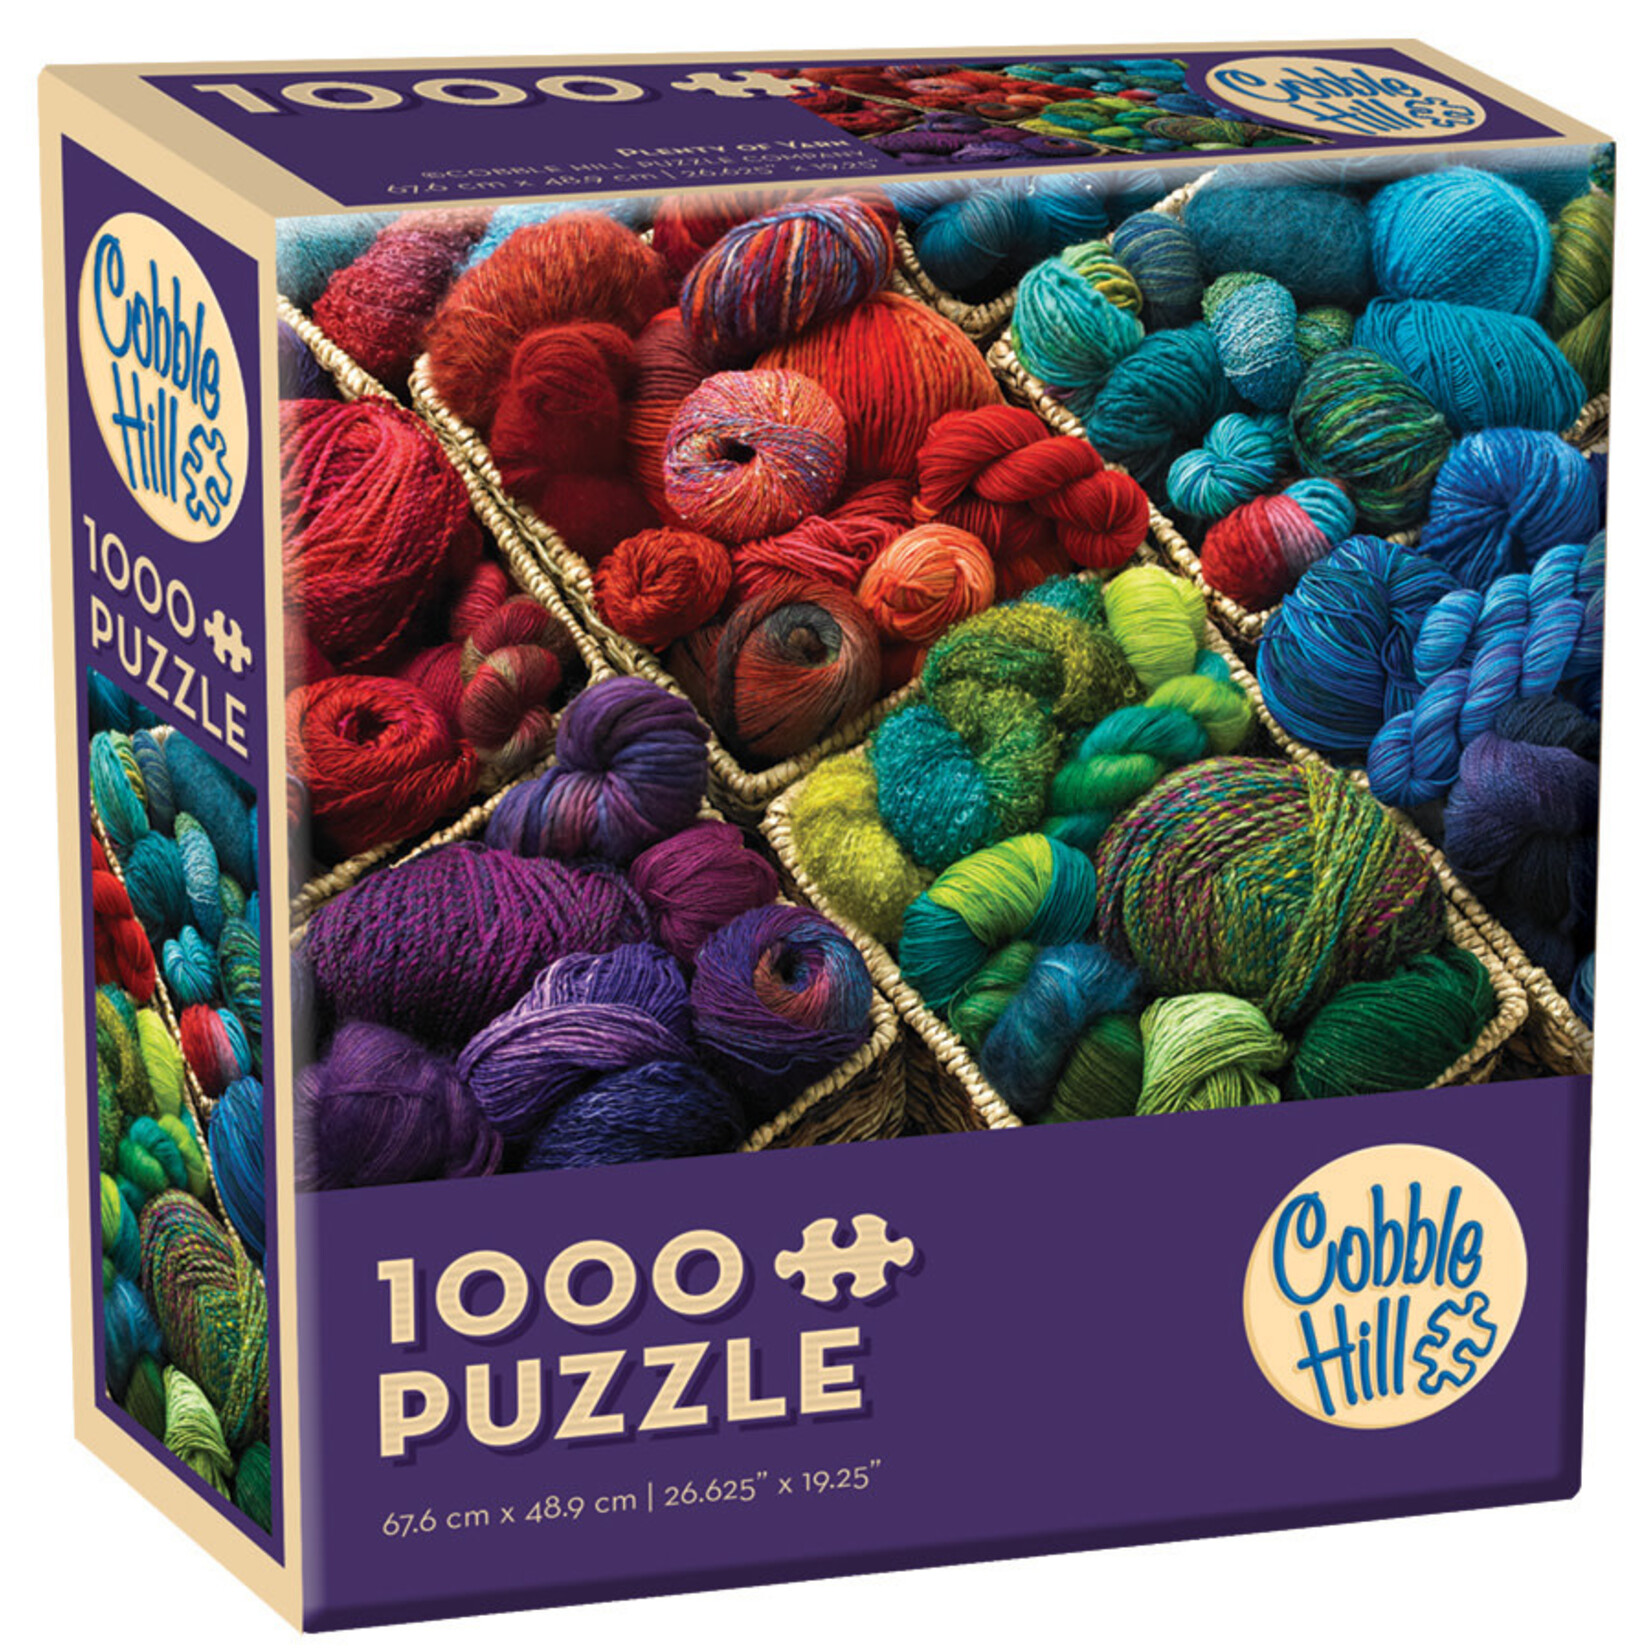 Cobble Hill Puzzles Plenty of Yarn 1000pc